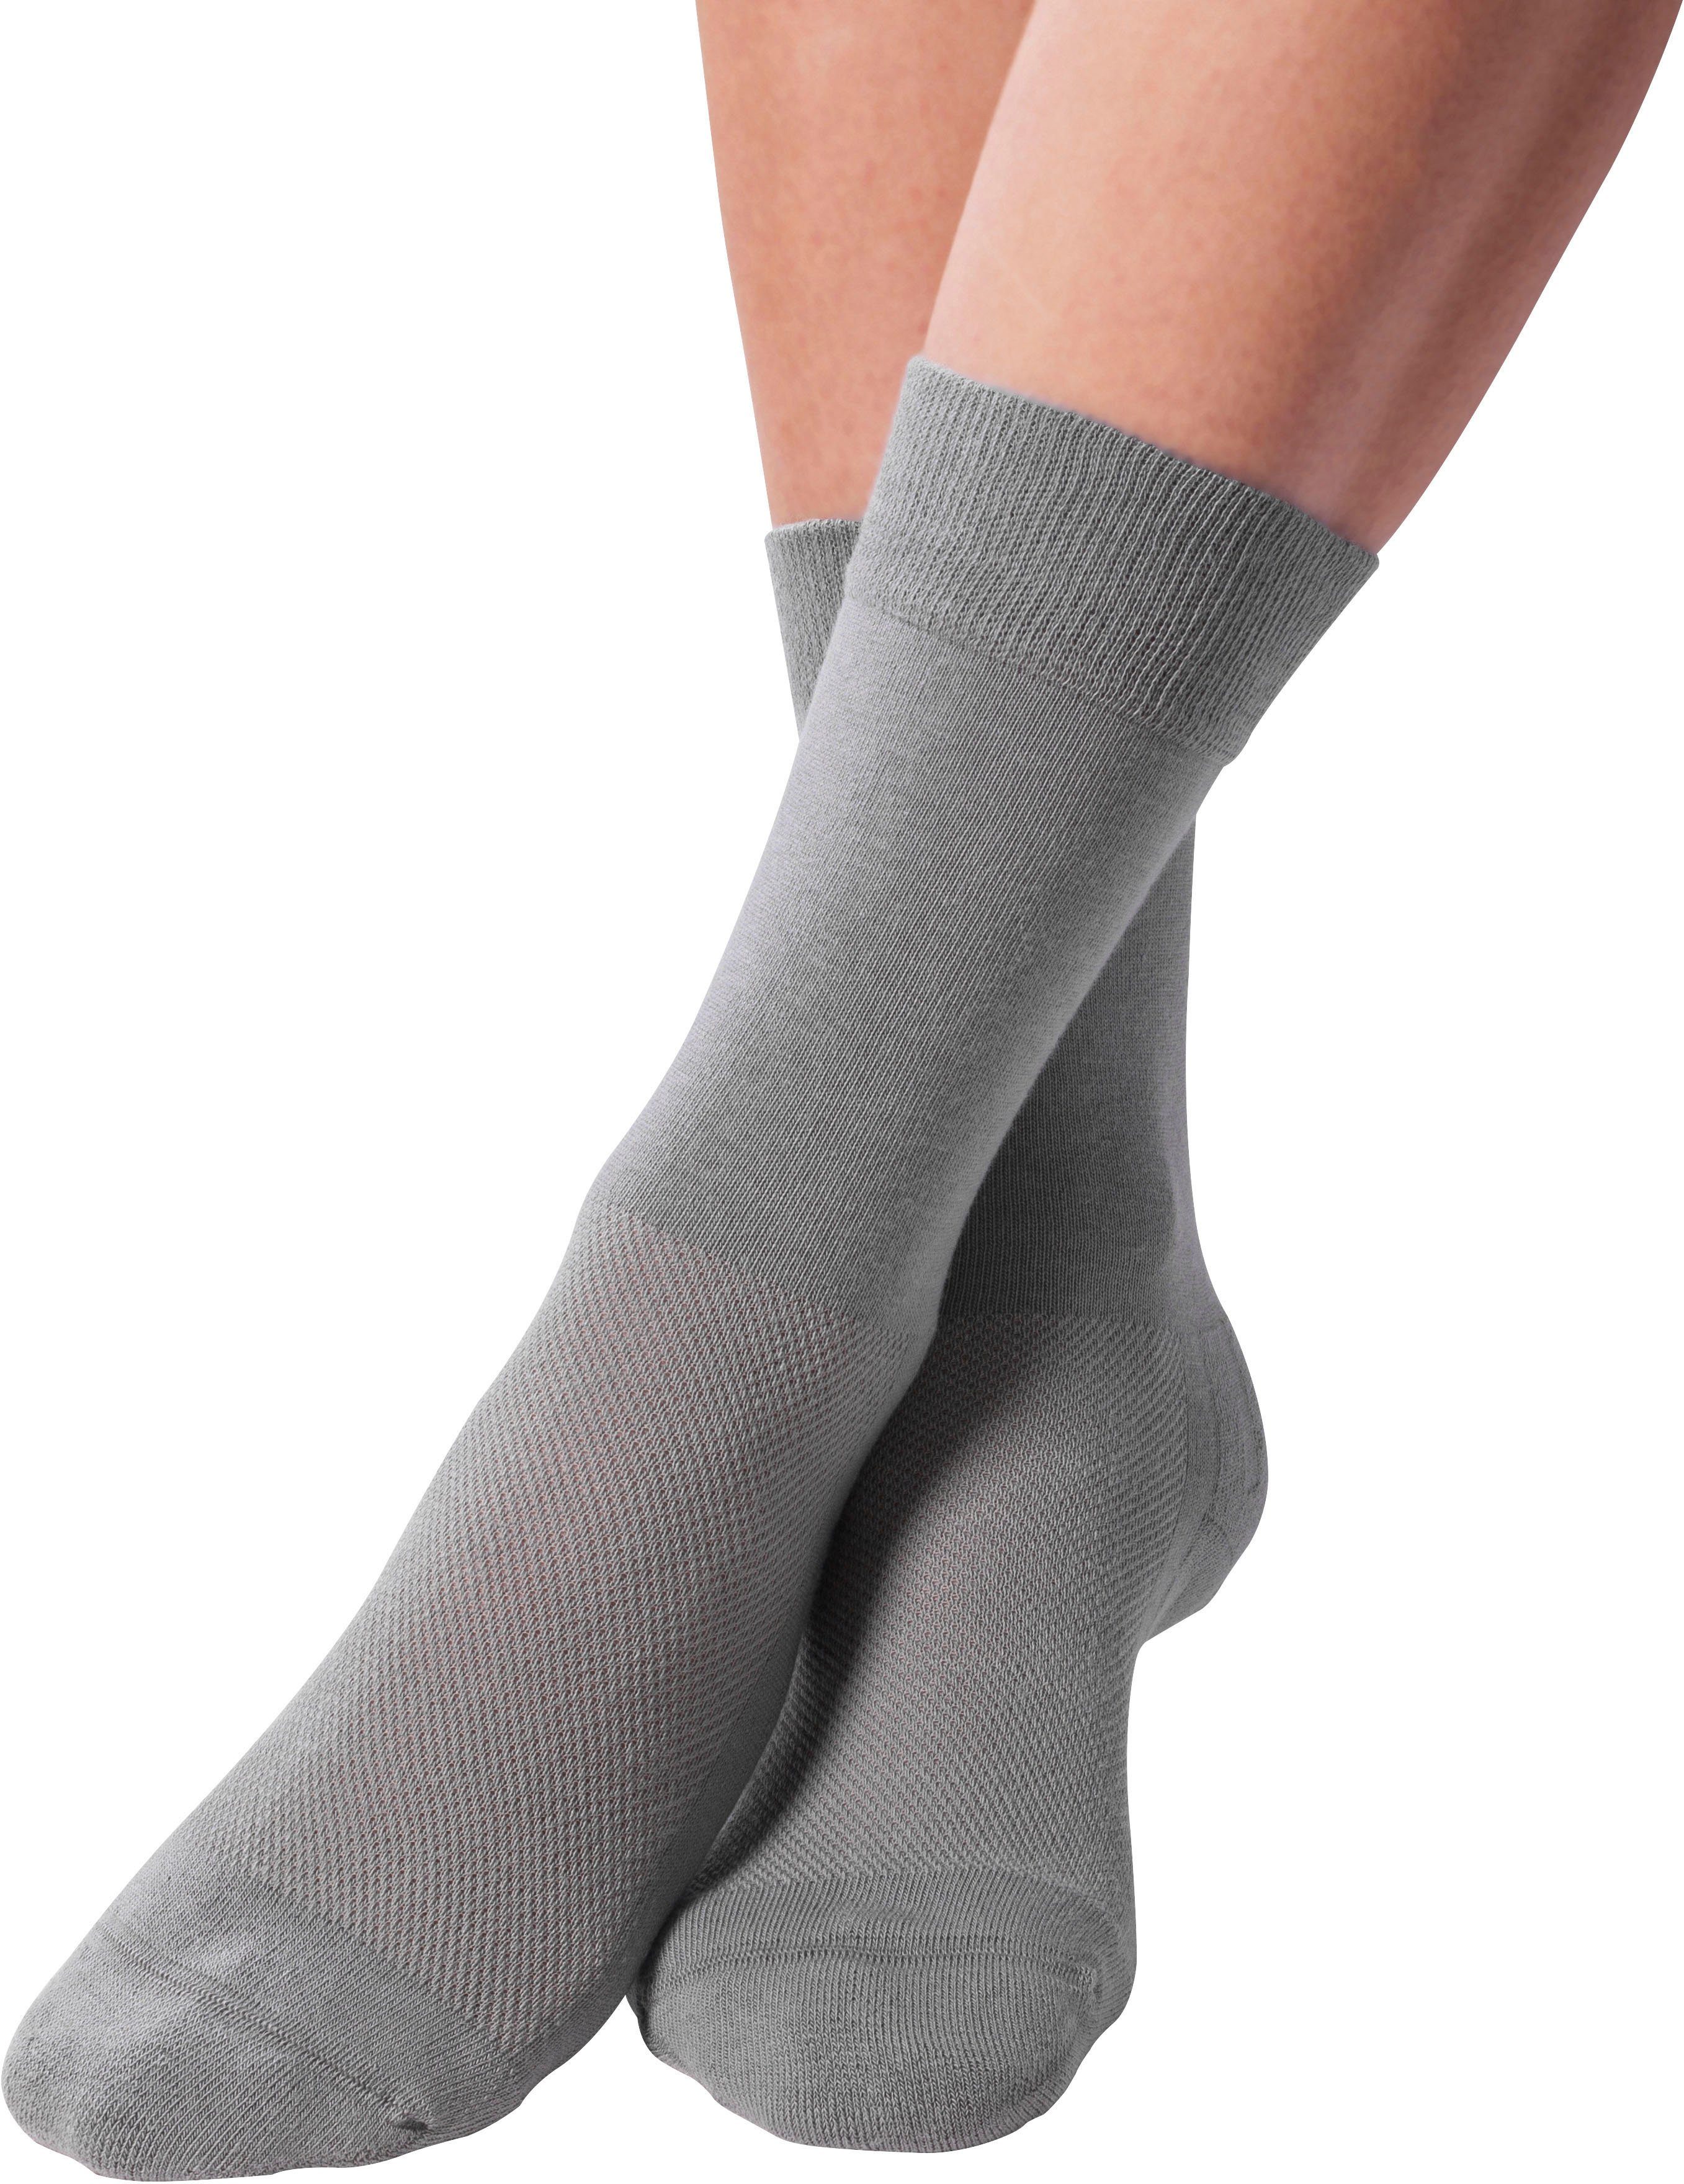 Fußgut Venenfeund (2-Paar) Sensitiv grau Socken Diabetikersocken